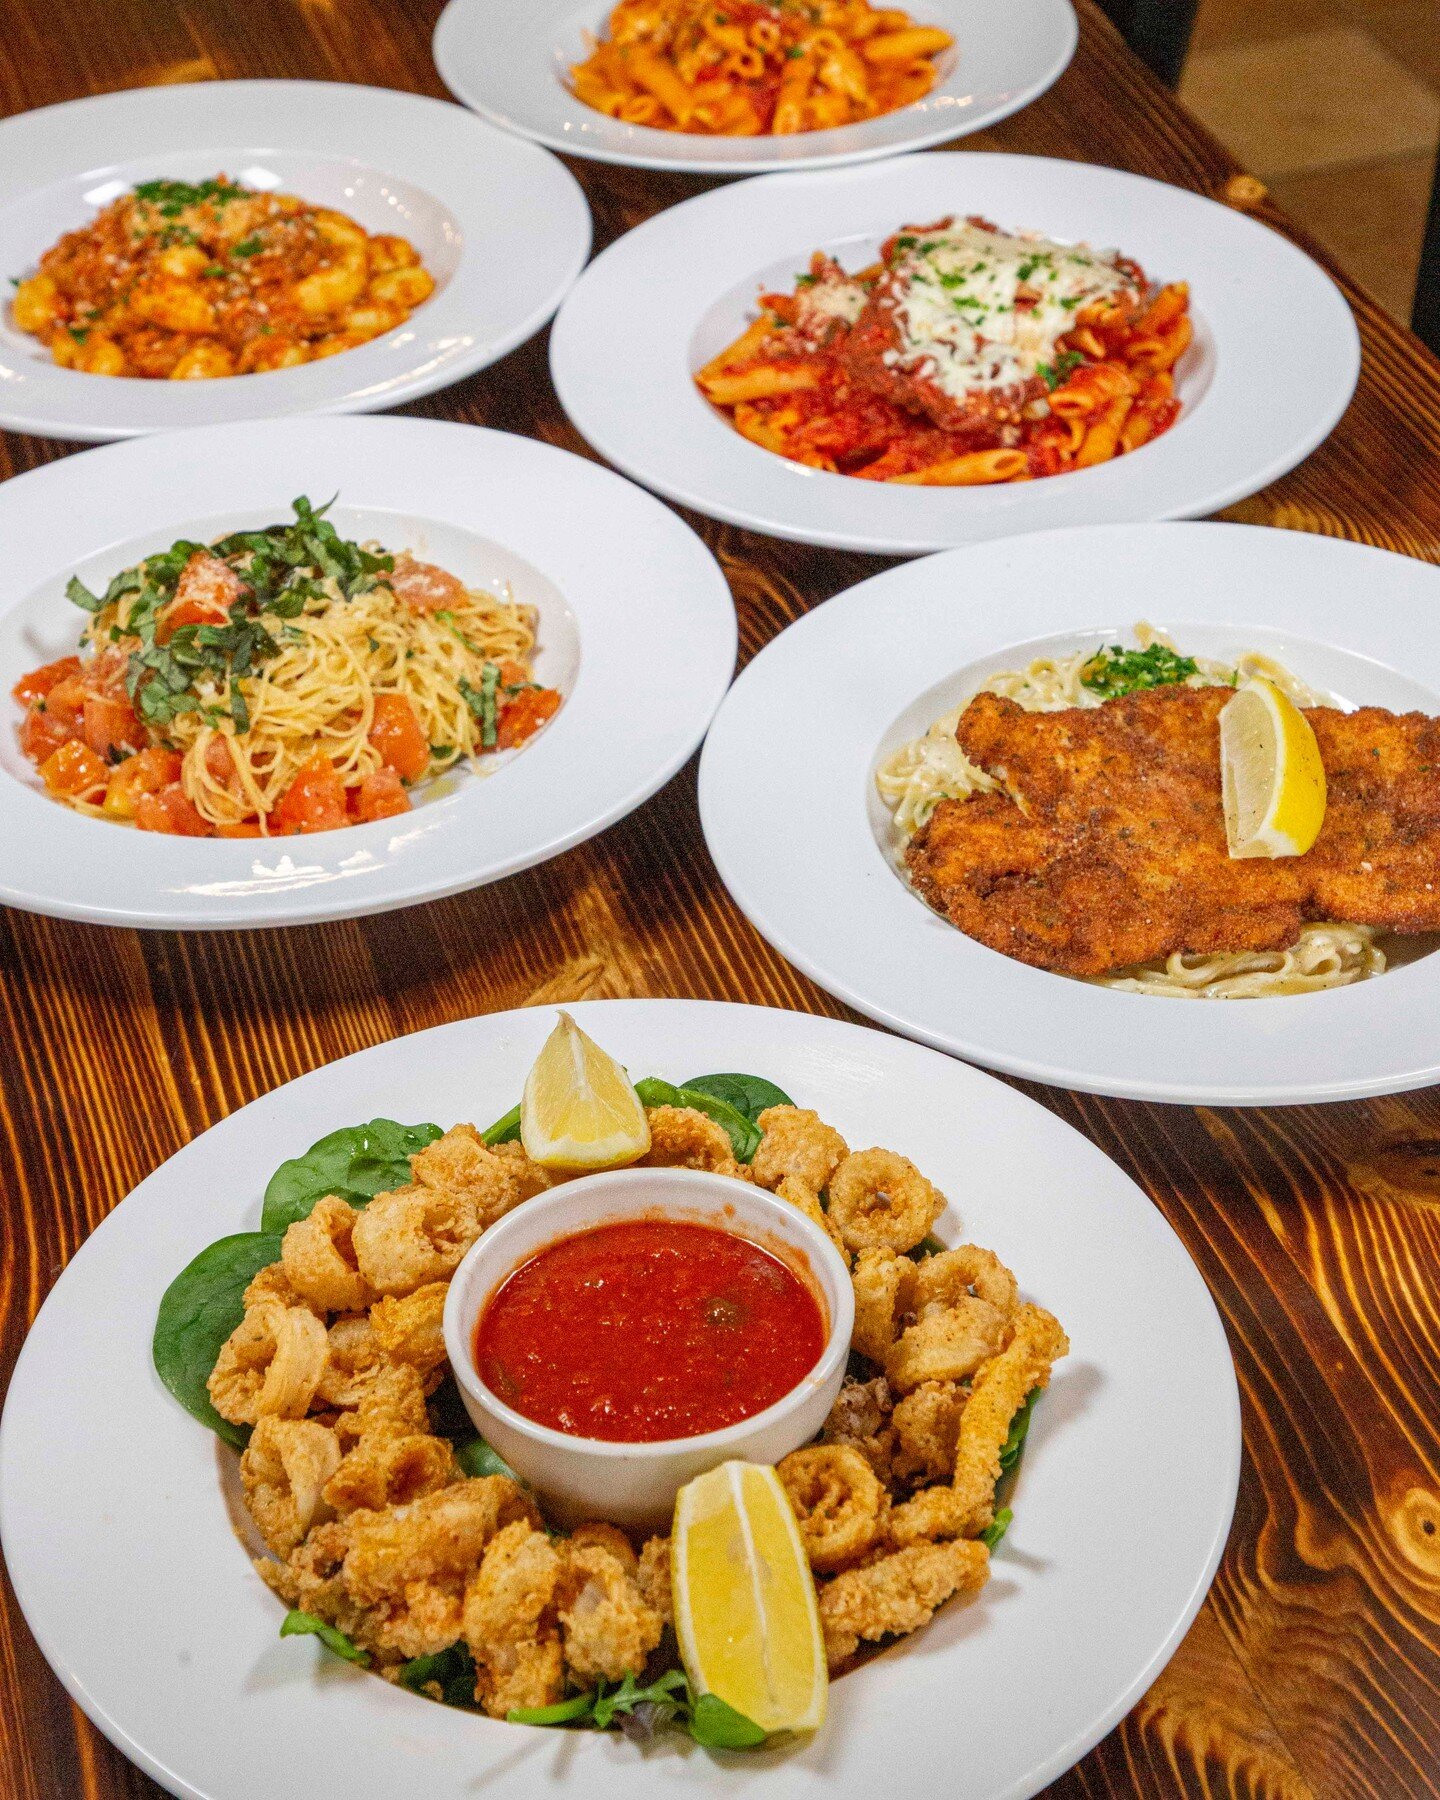 Buon appetito famiglia ✨ We are open! Treat yourself with your favorites from Piero's 🍷

#pierospastanc #pasta #italianfood #chapelhillnc #chapelhilleats #chapelhillfood